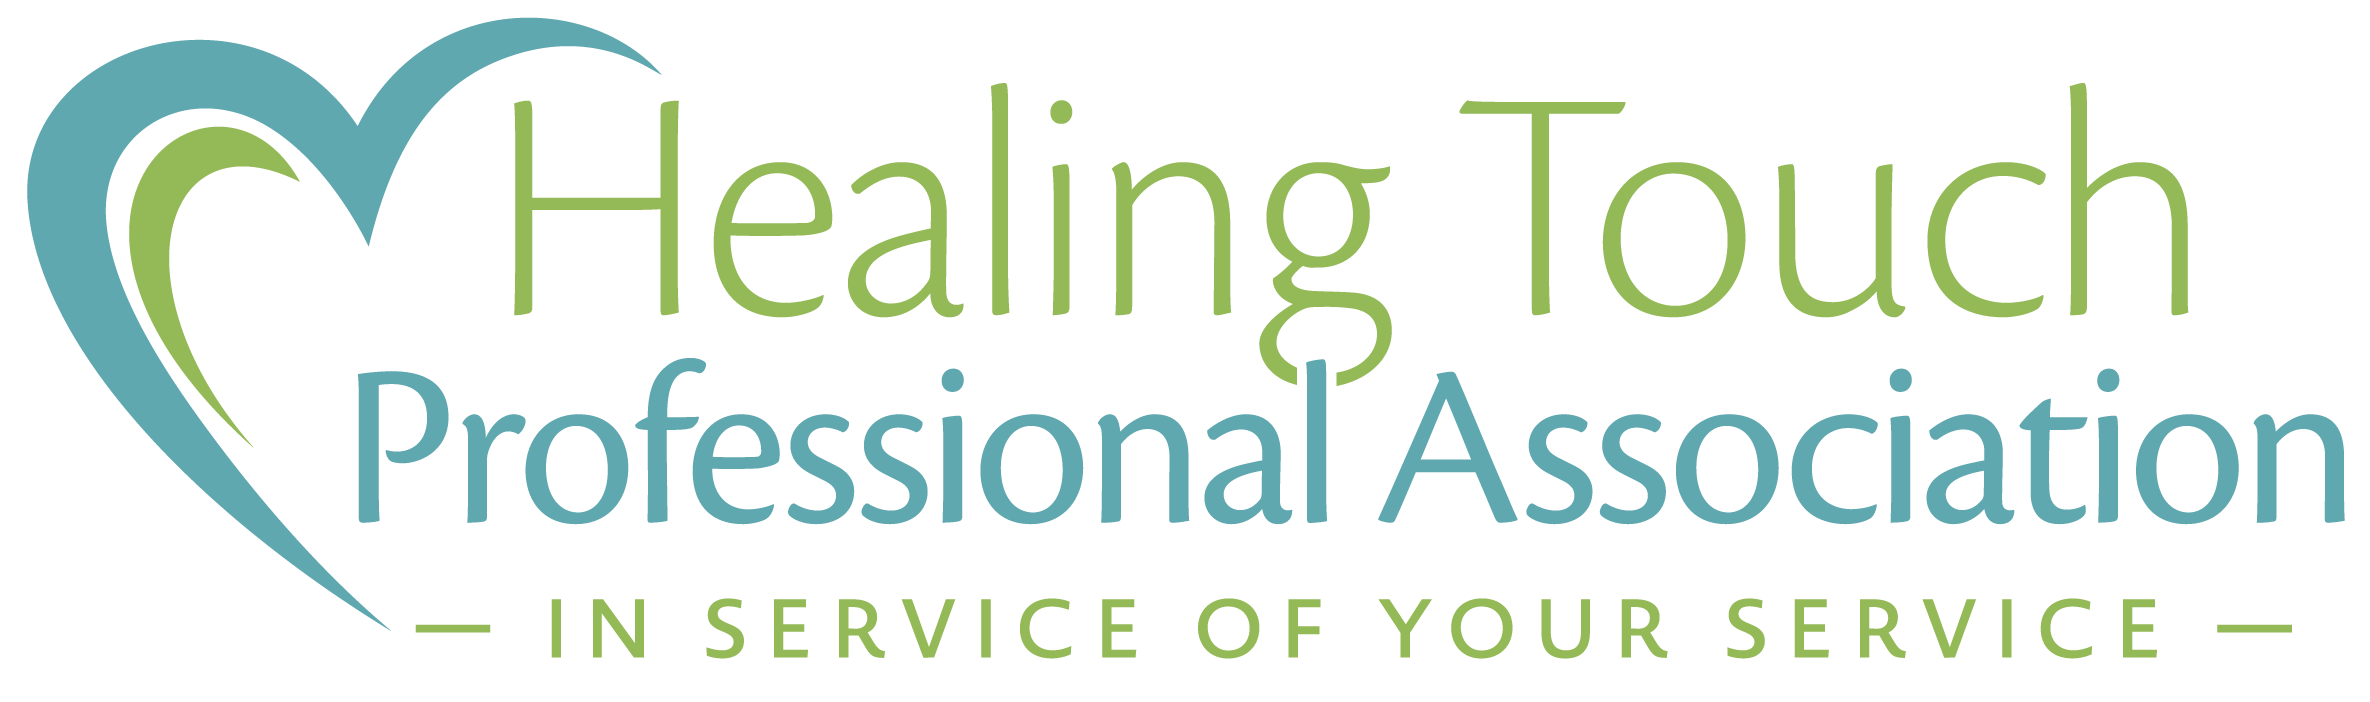 Healing Touch Professional Association - HTPA